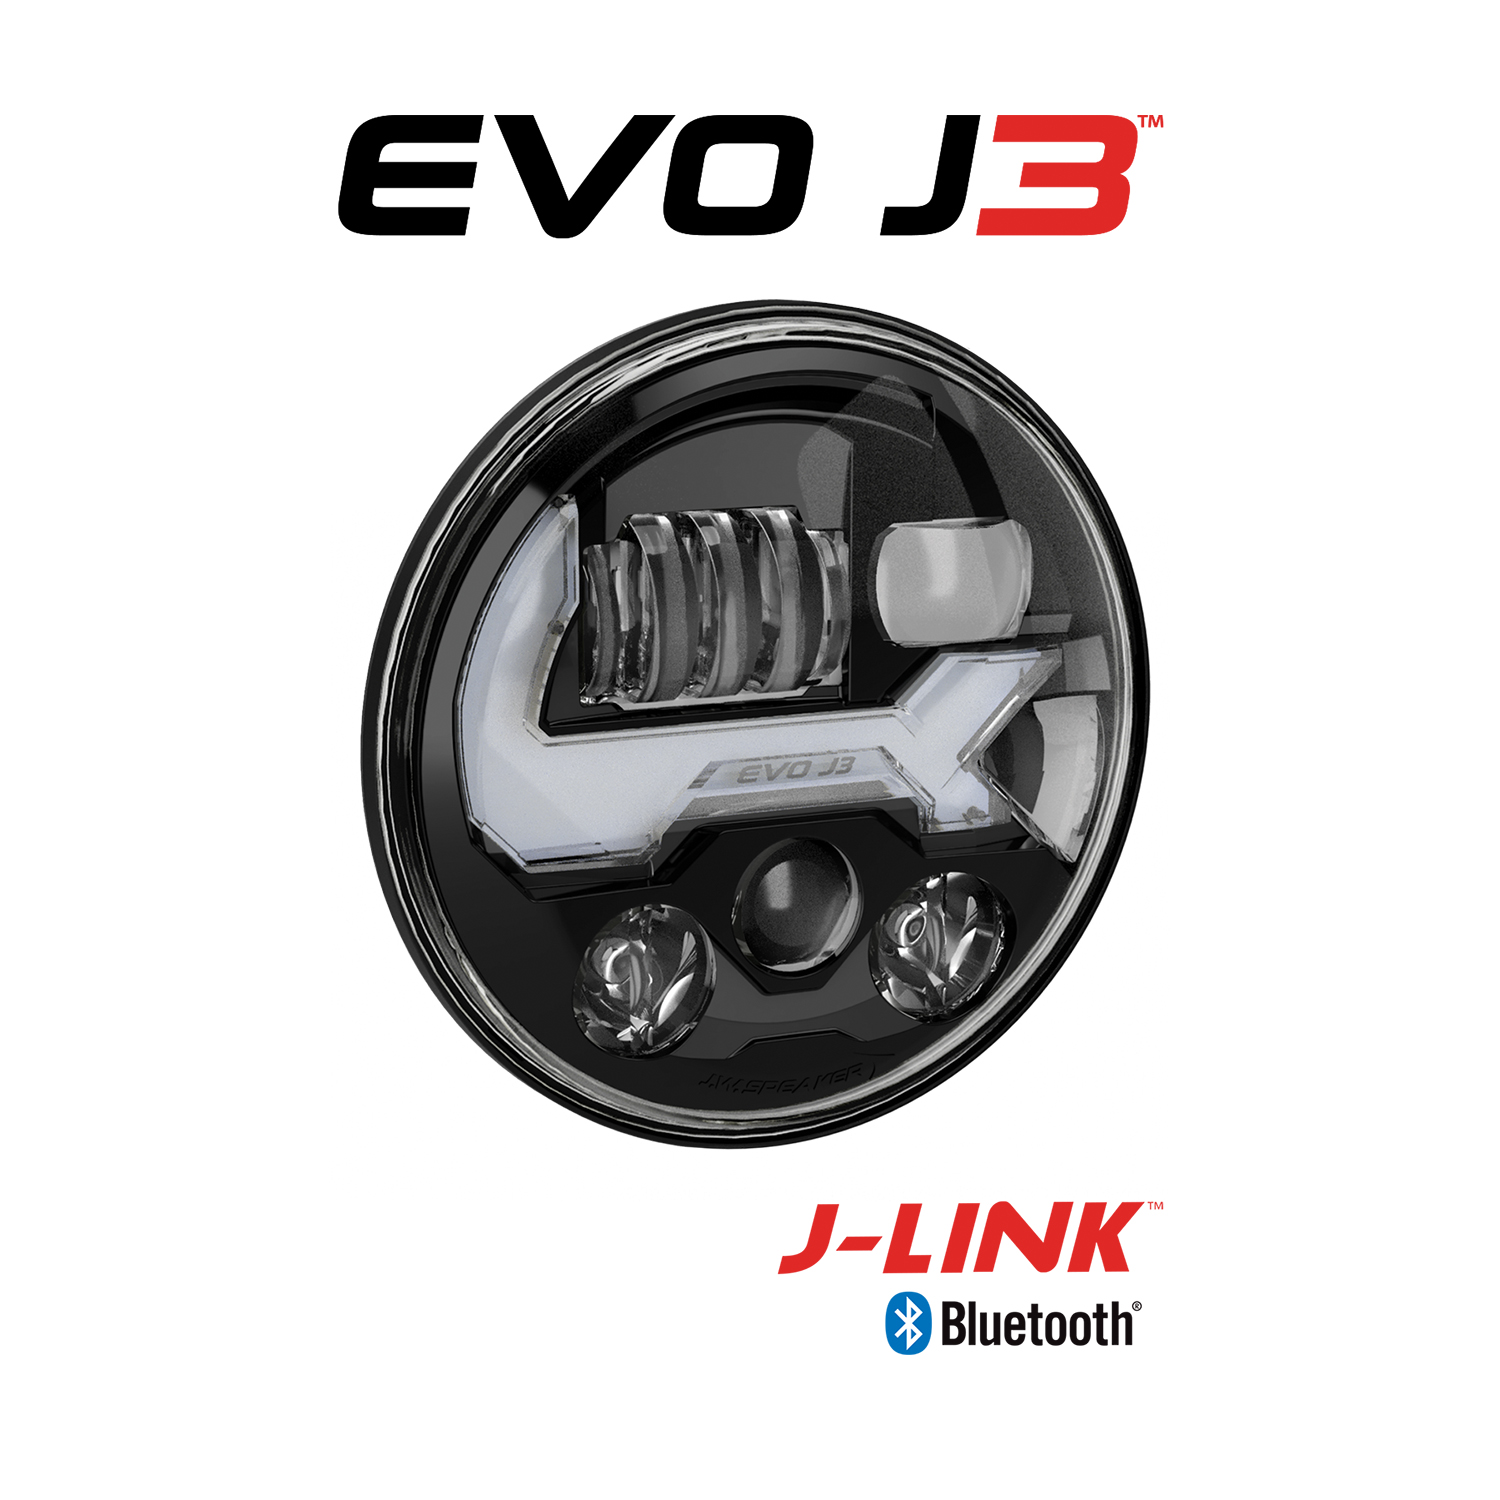 Jeep LED Headlights - Model EVO J3